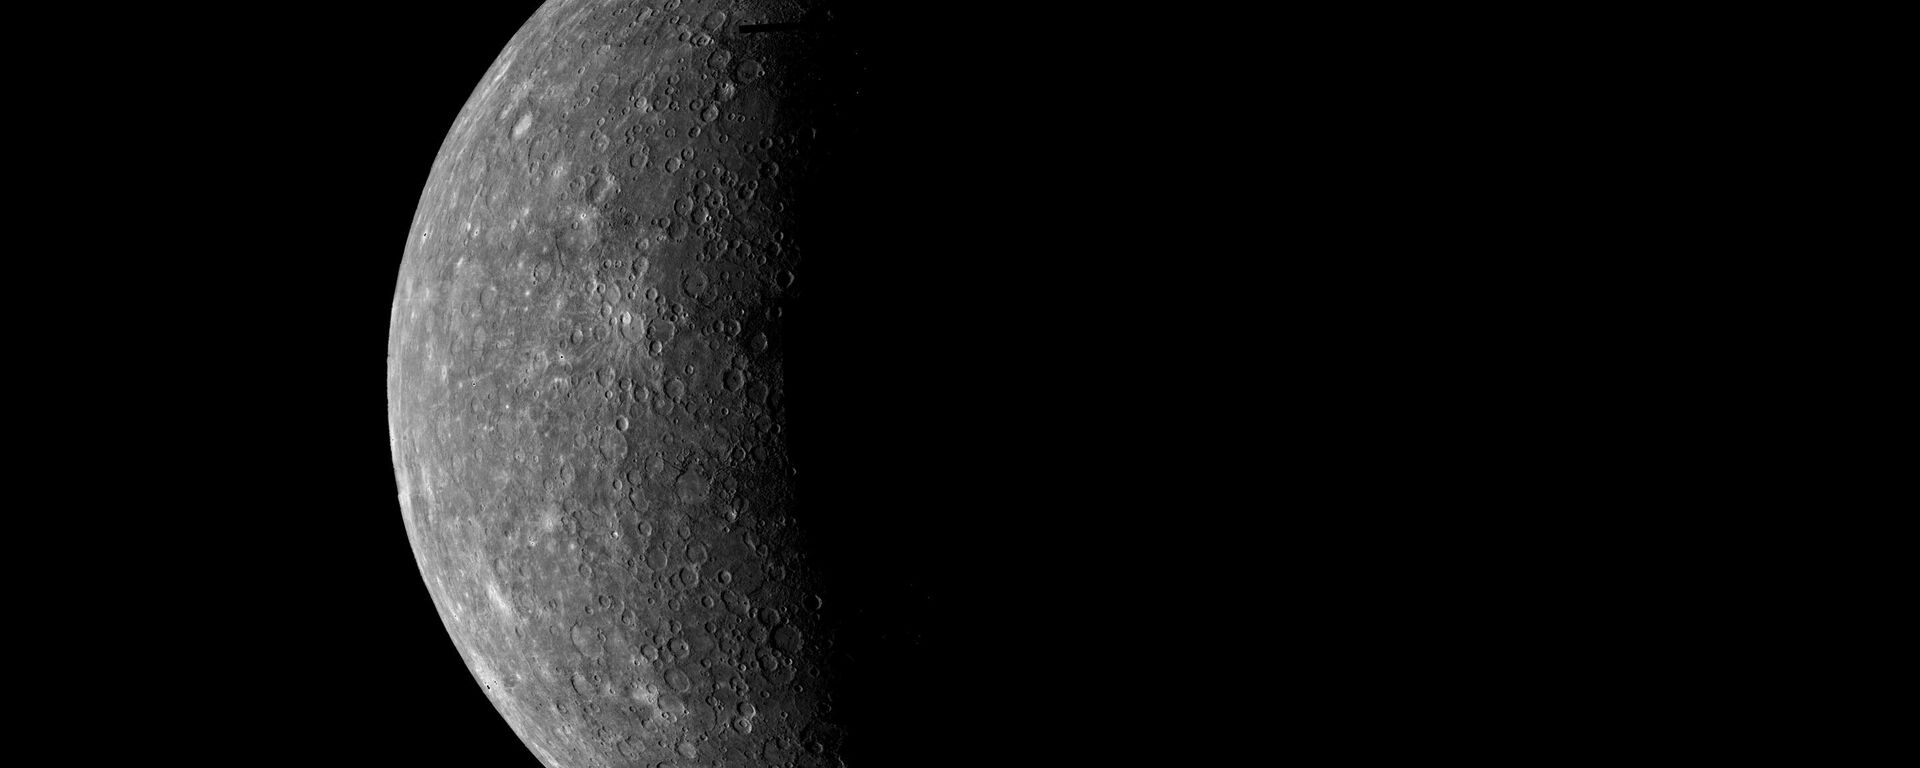 Планета Меркурий, архивное фото - Sputnik Литва, 1920, 04.10.2021